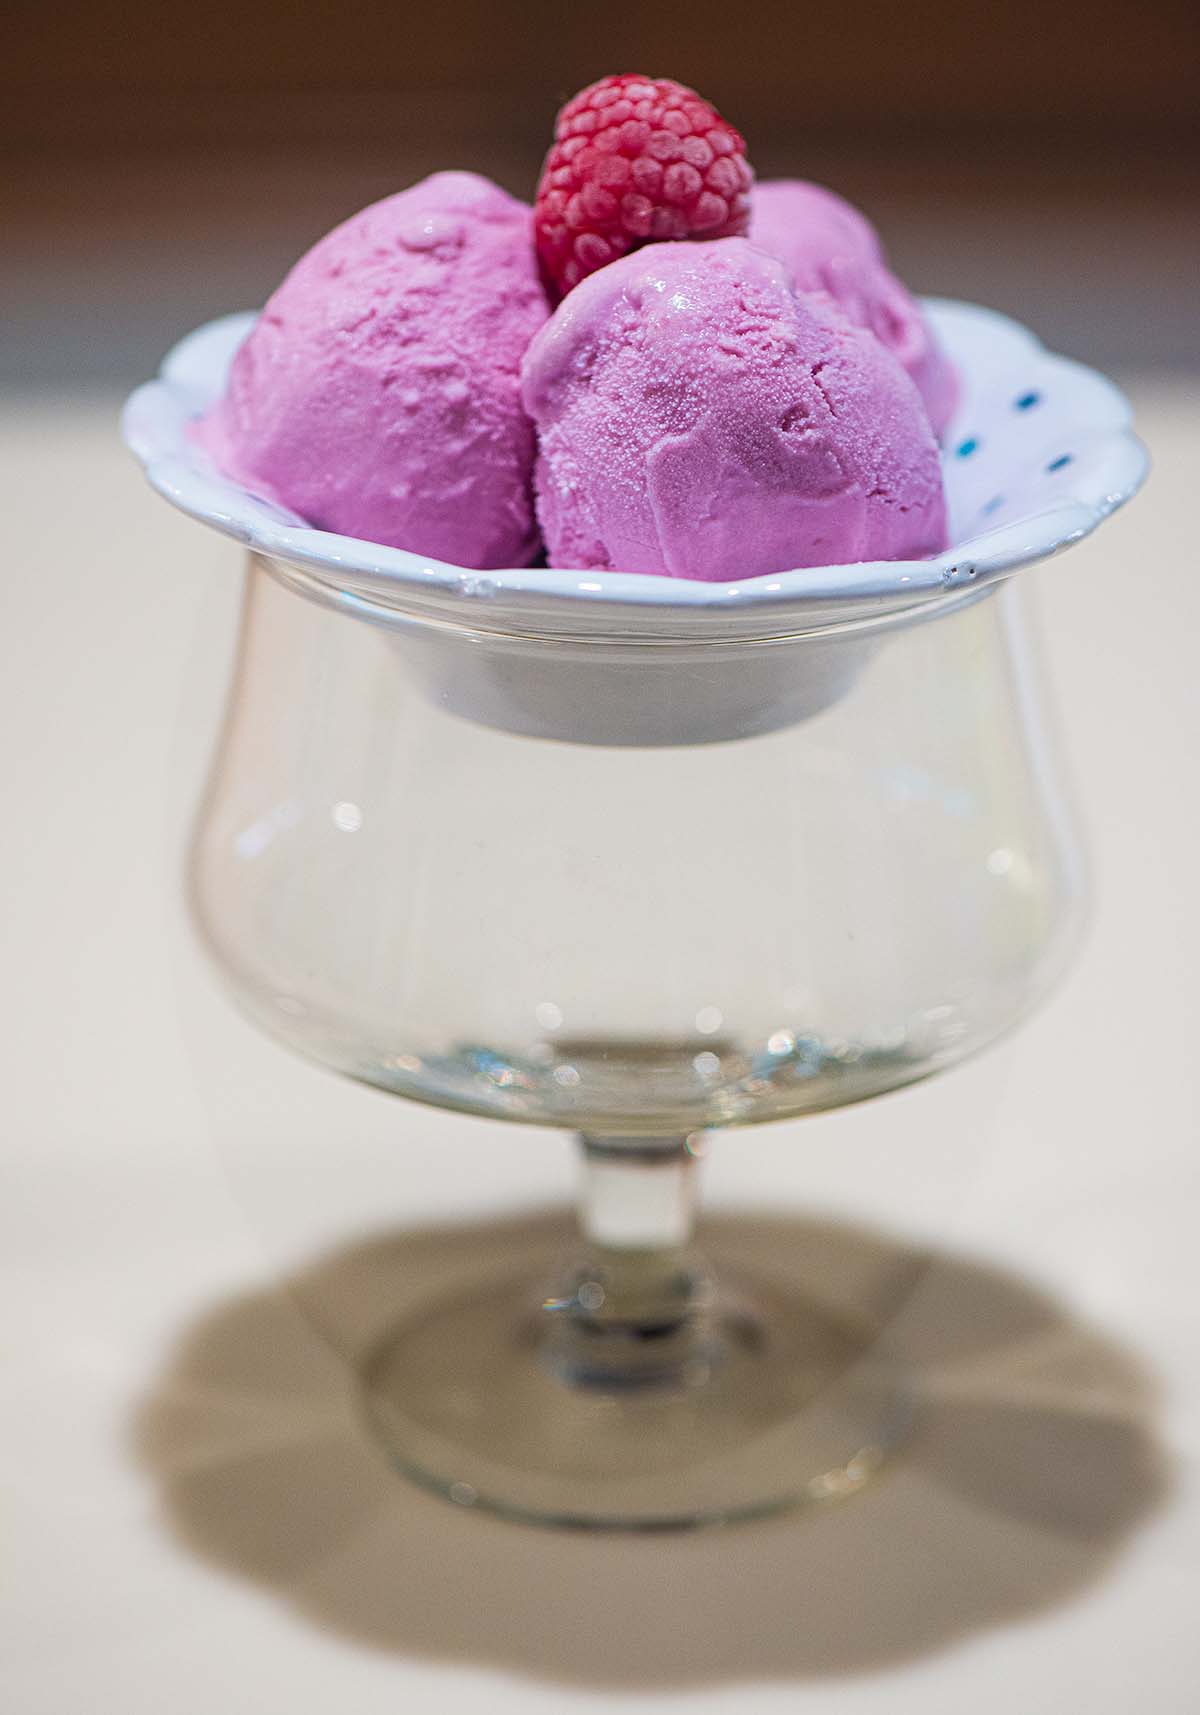 Ube Ice Cream: Purple Yams in Your Ice Cream?